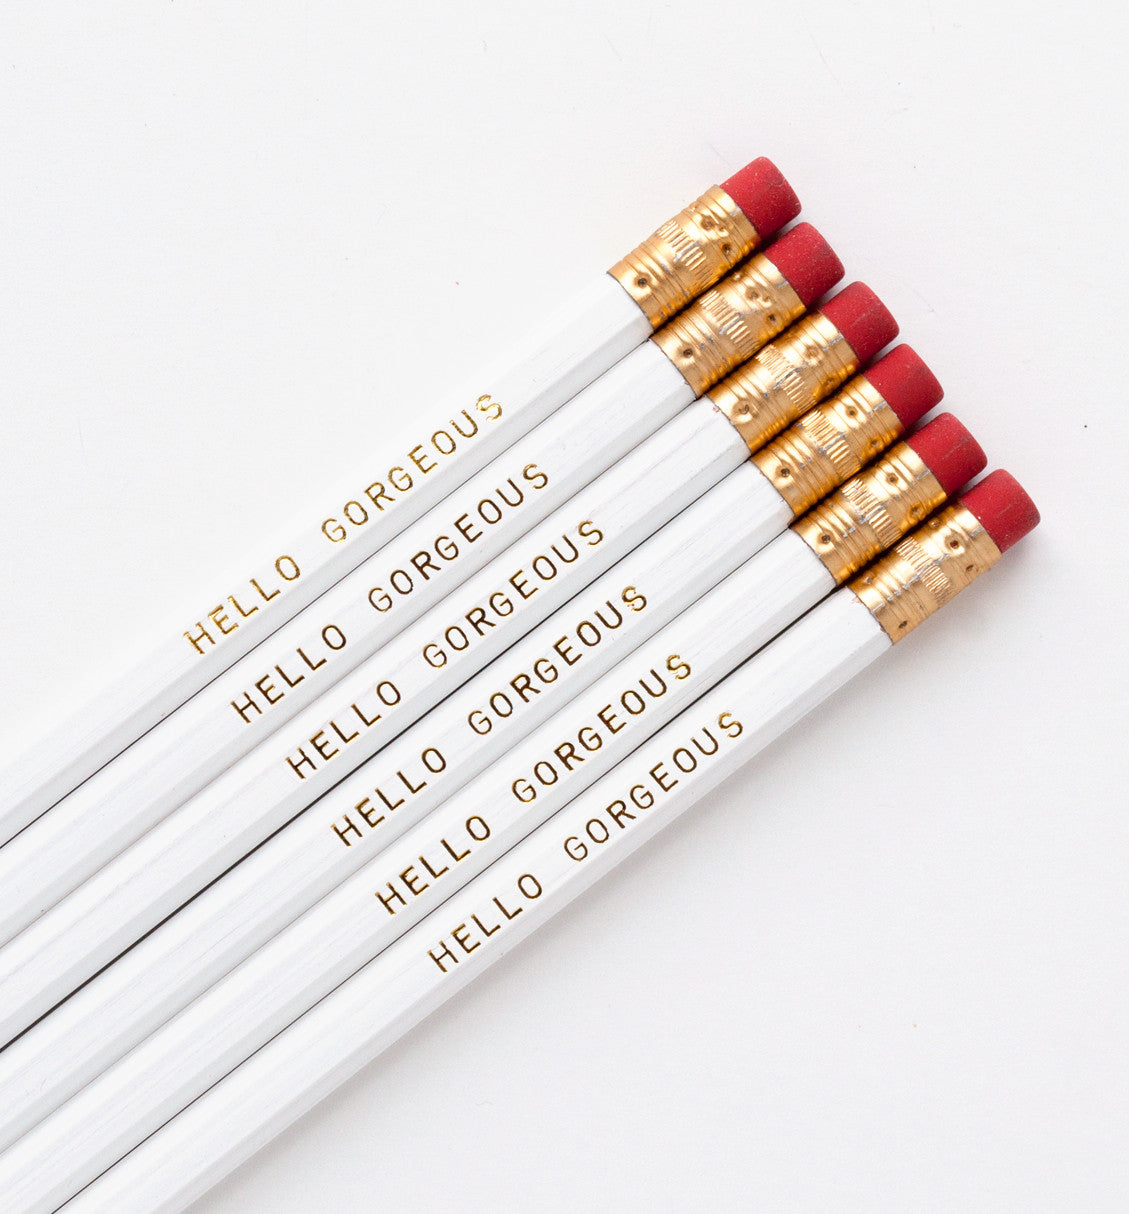 Hello Gorgeous pencils